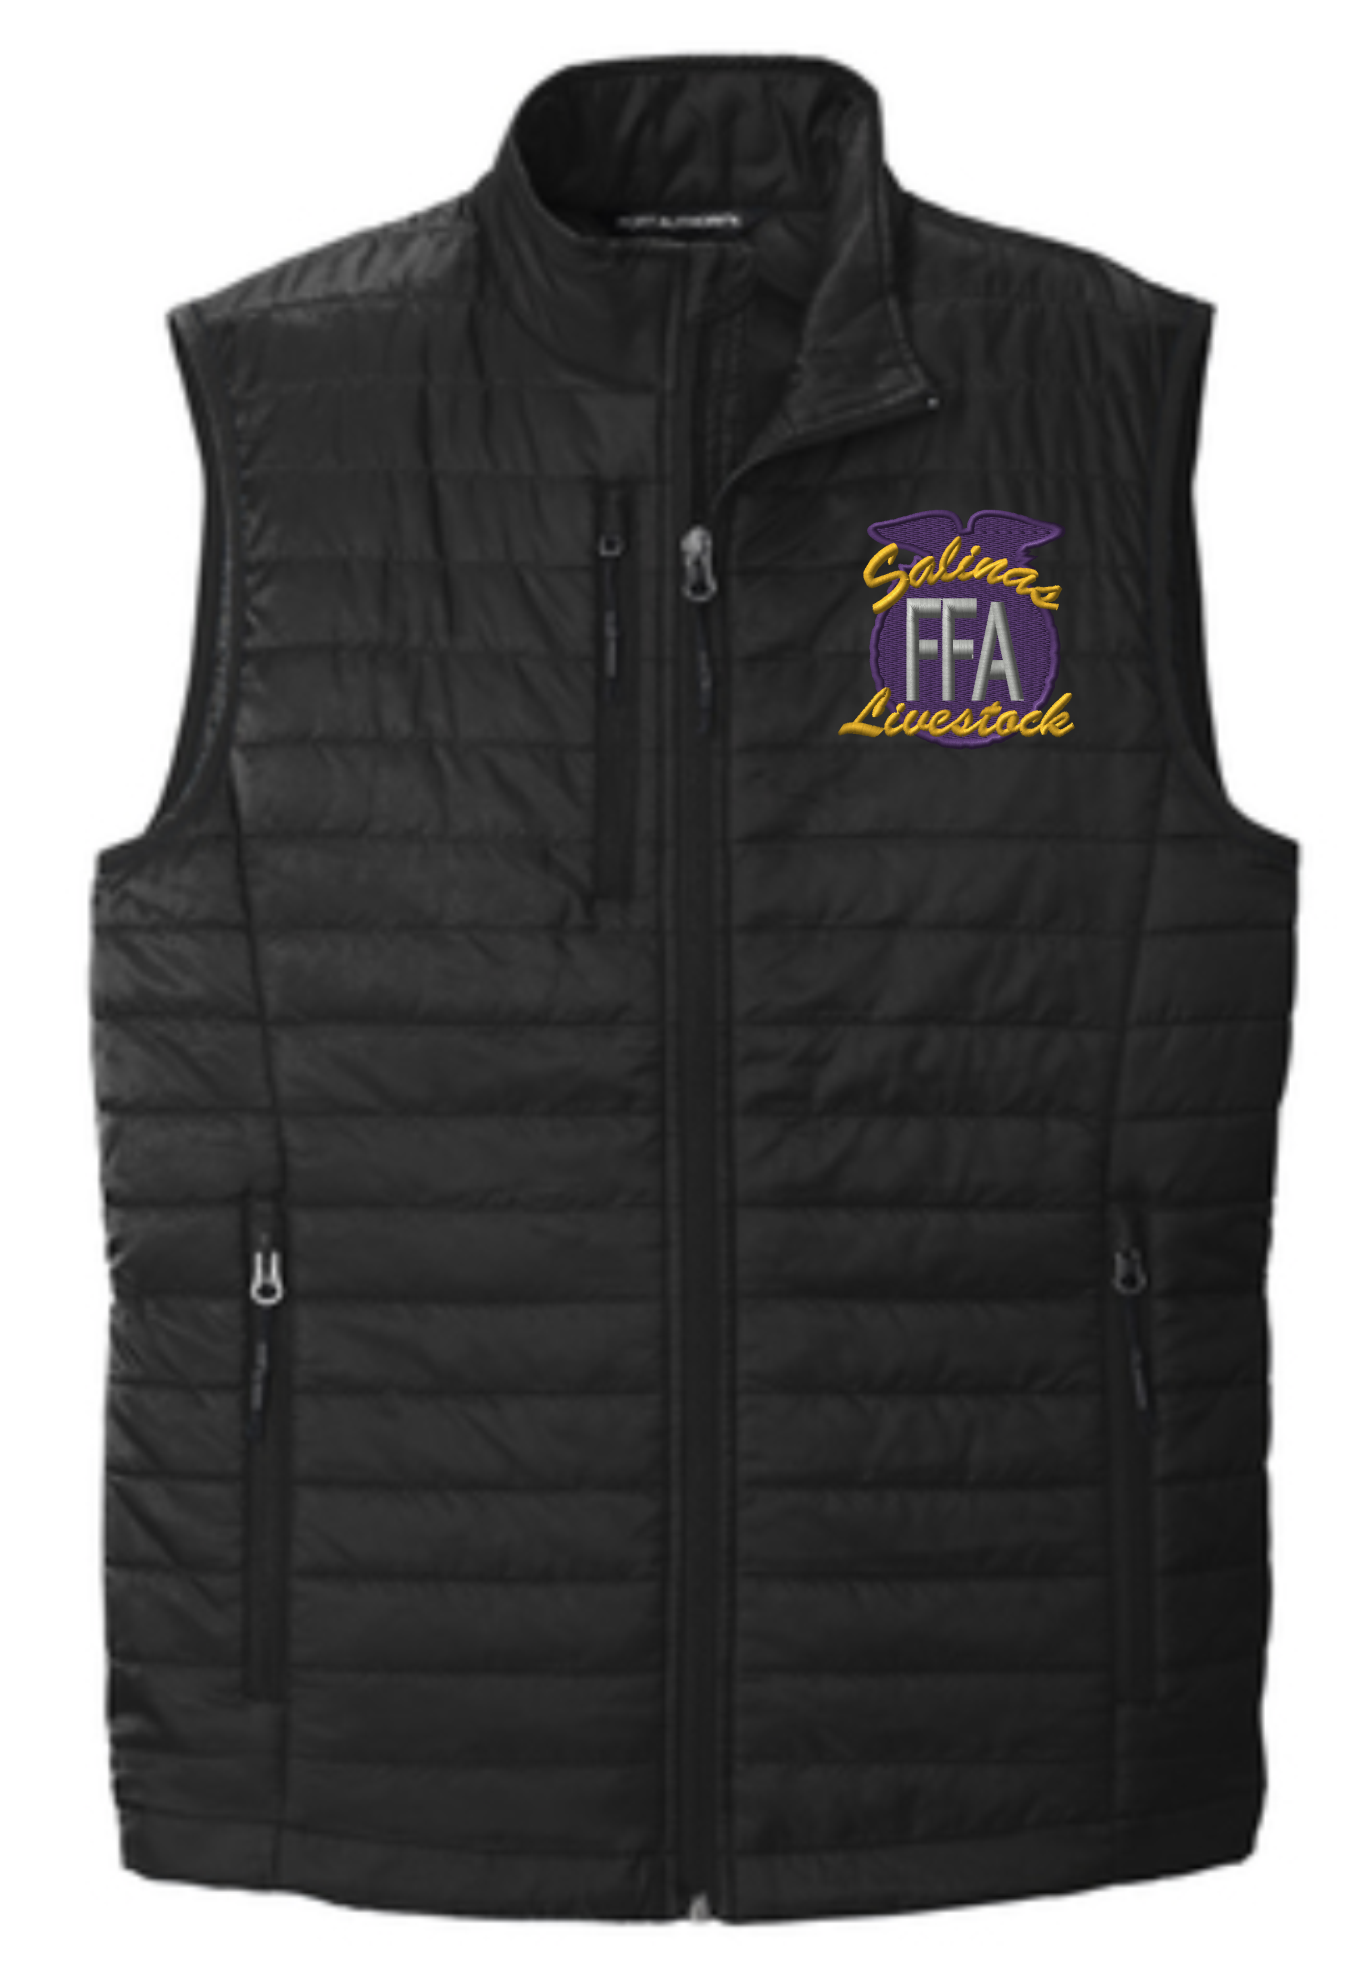 Salinas HS Packable Puffy Vest Men's & Women's